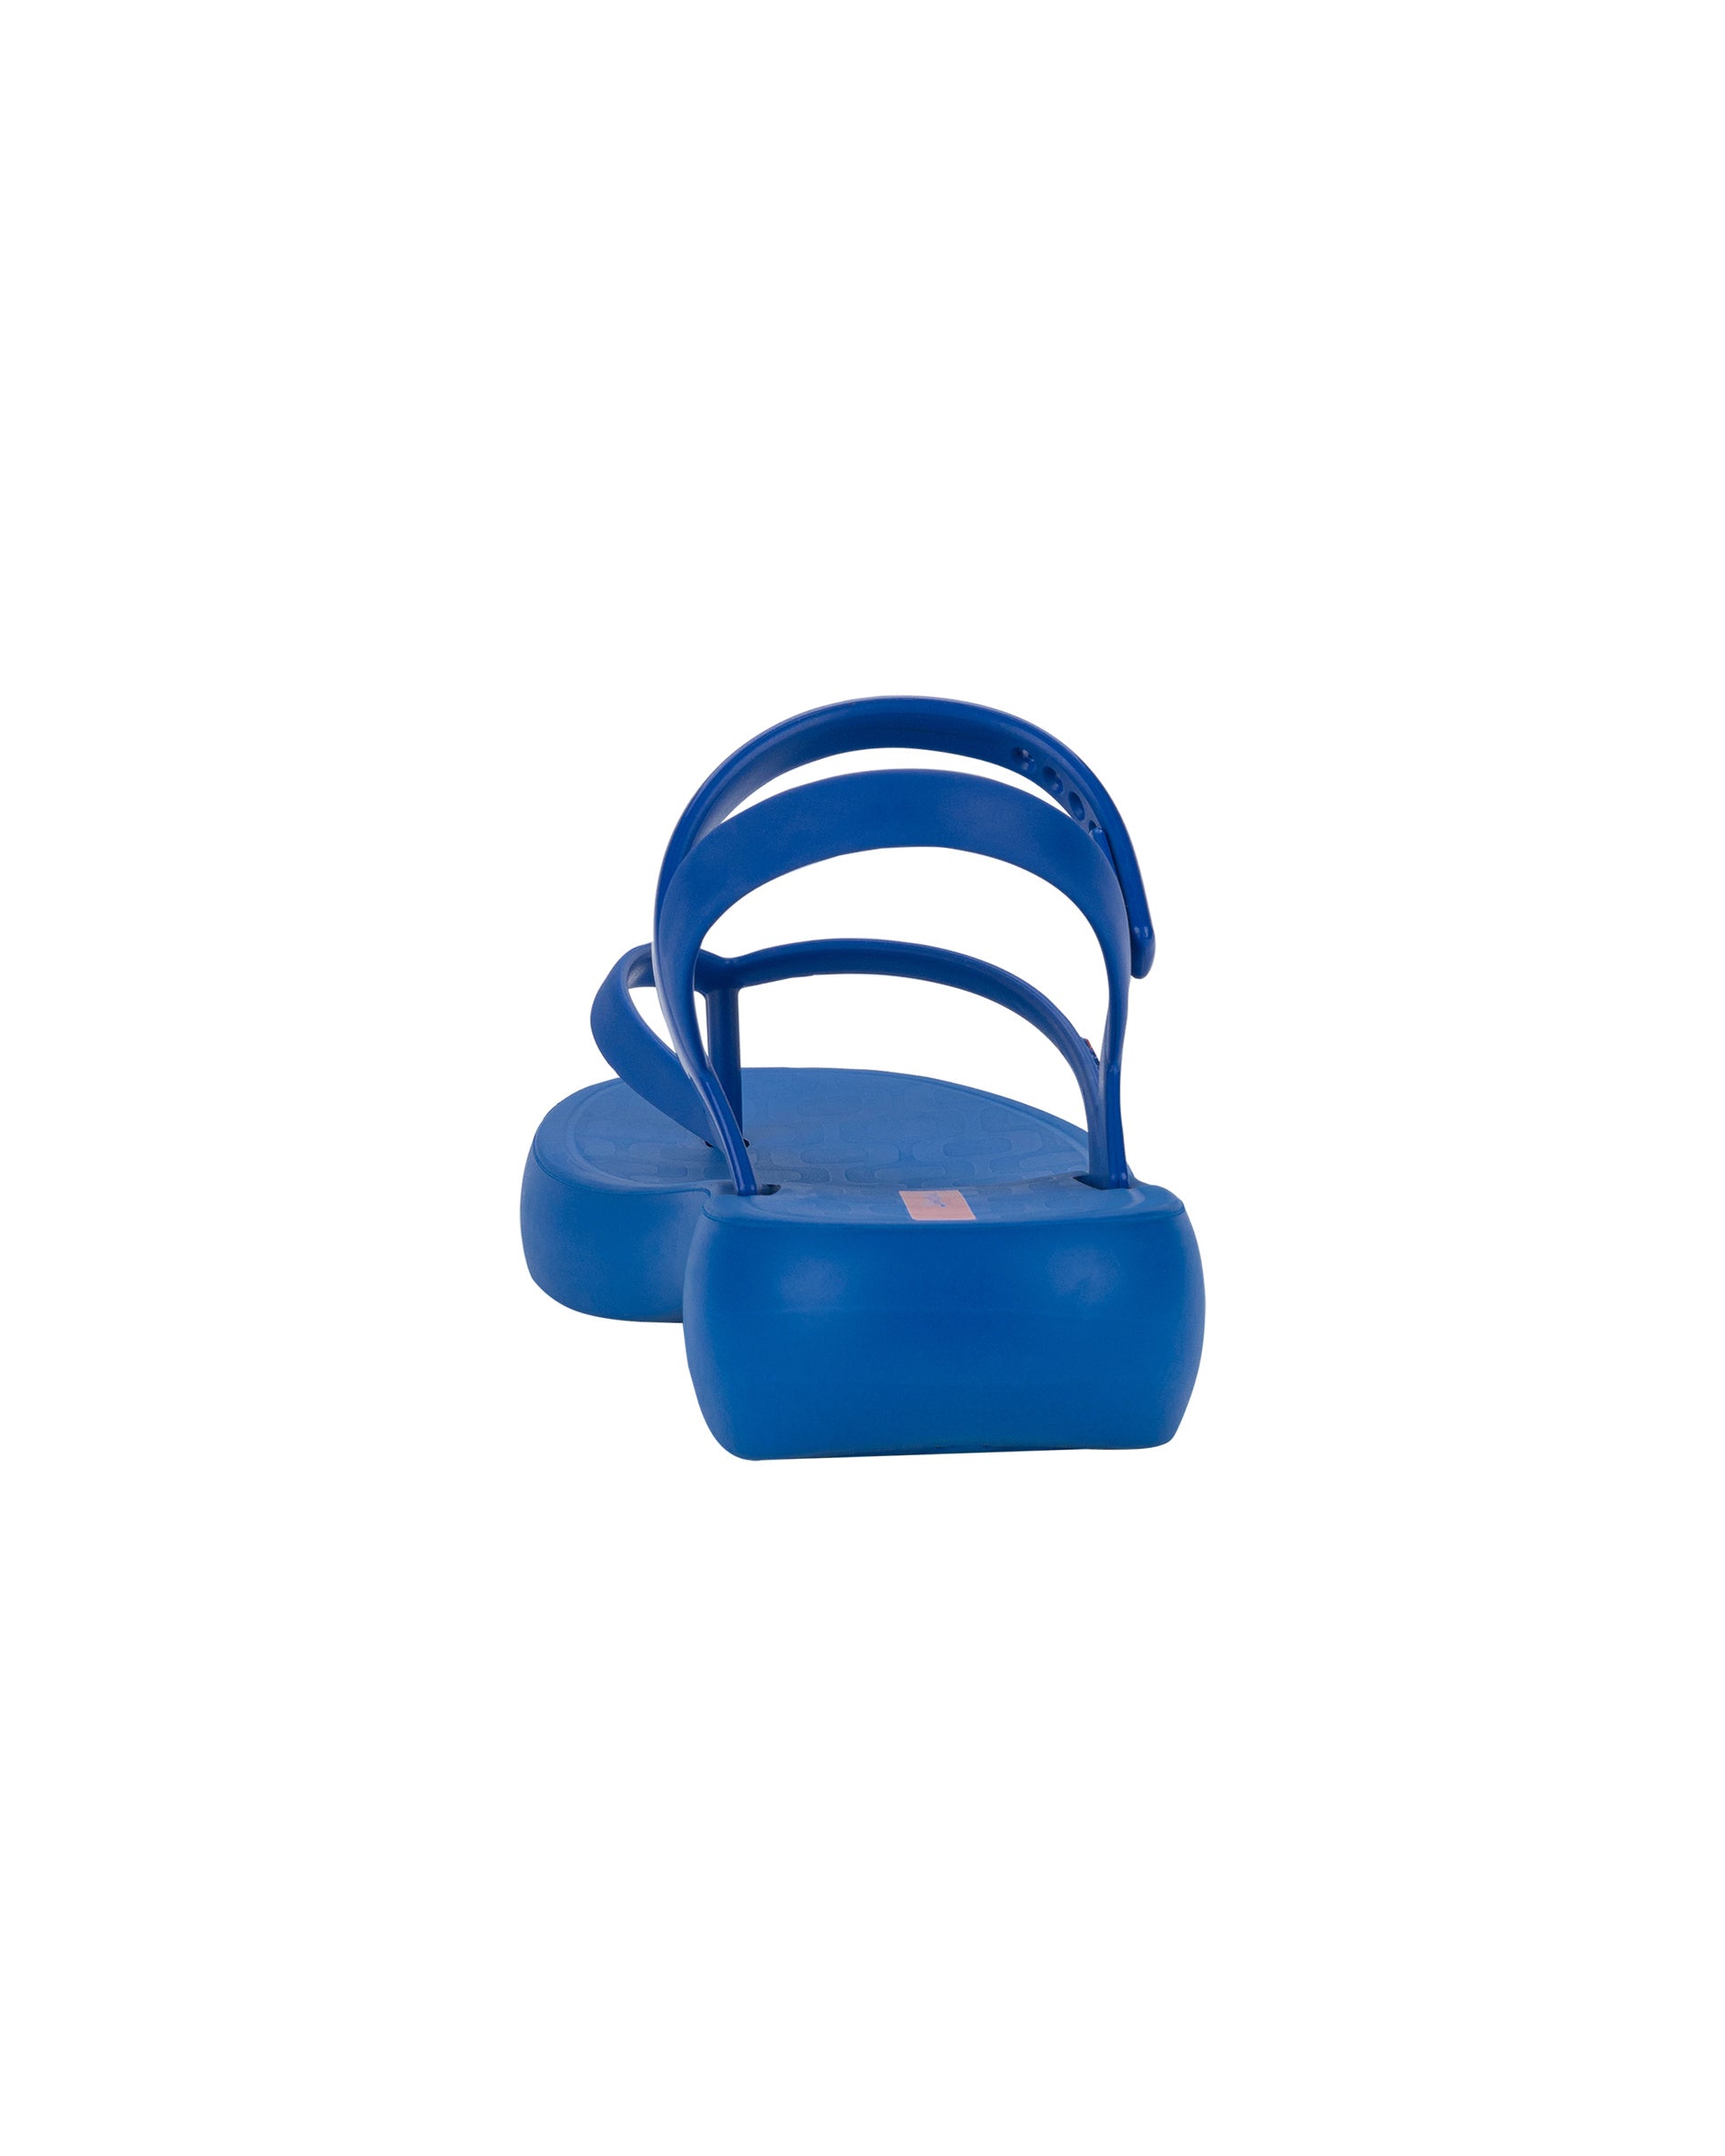 Back view of a blue Ipanema Verano women's sandal.